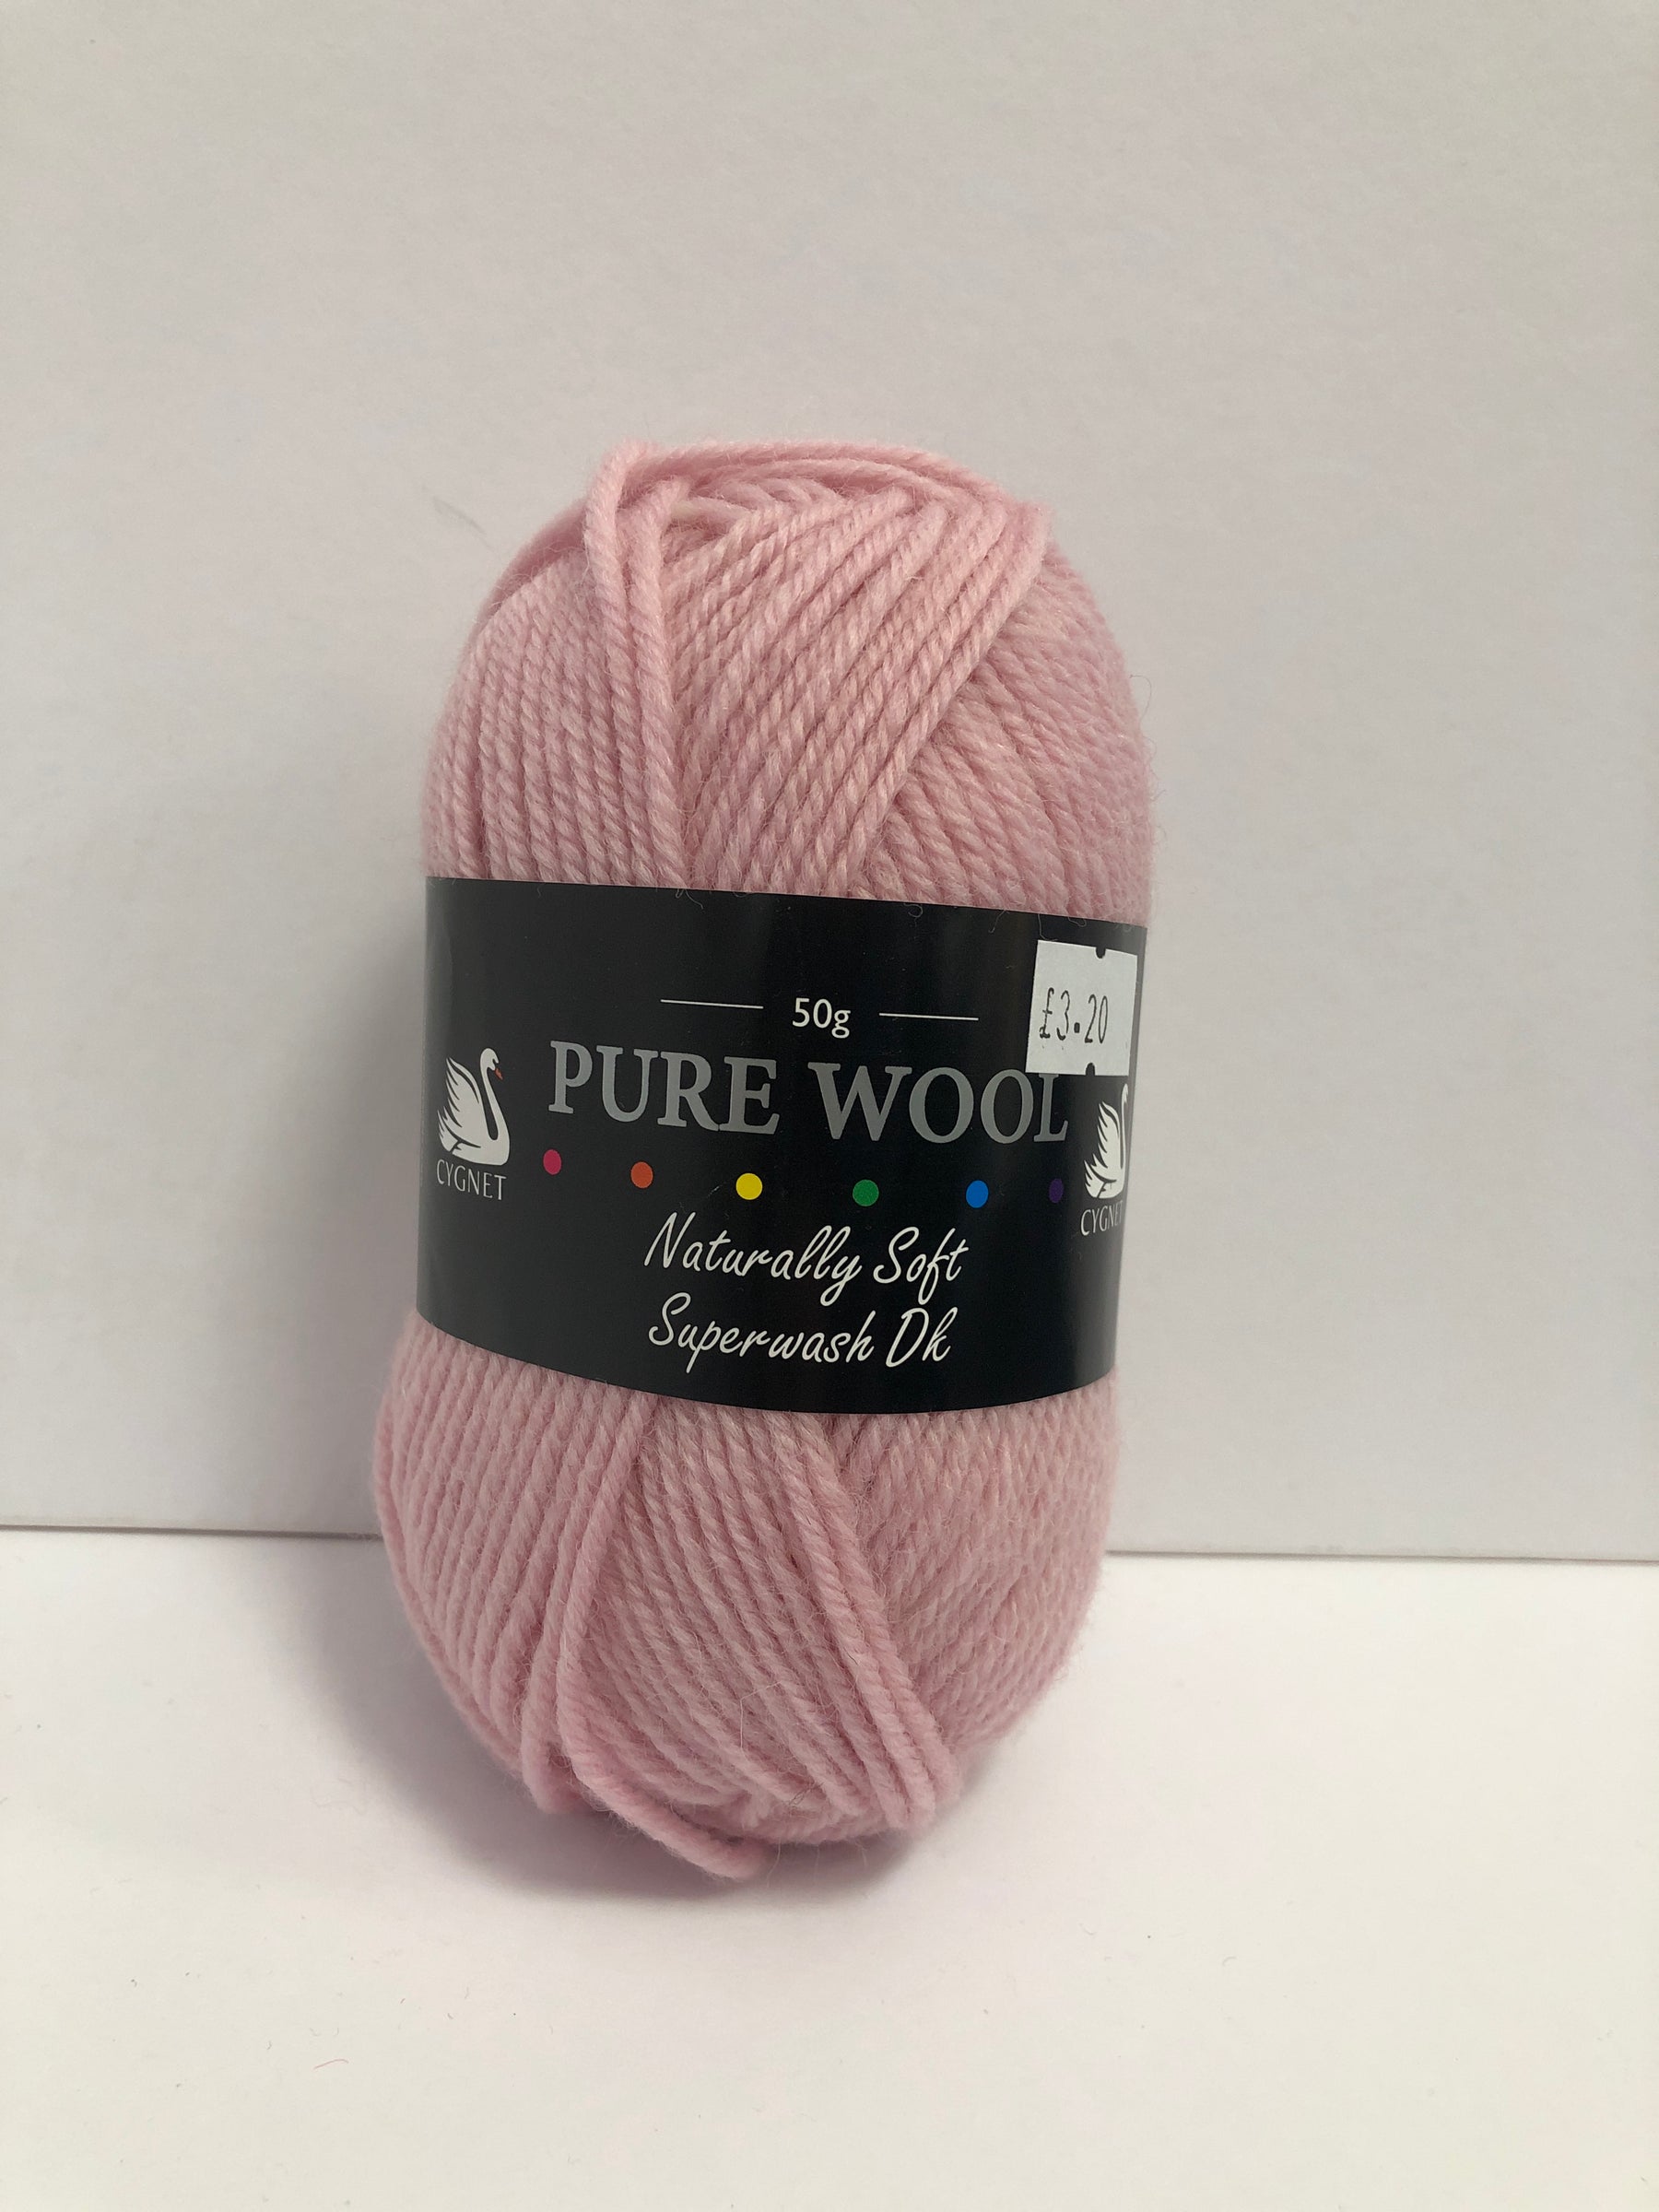 Cygnet Pure wool